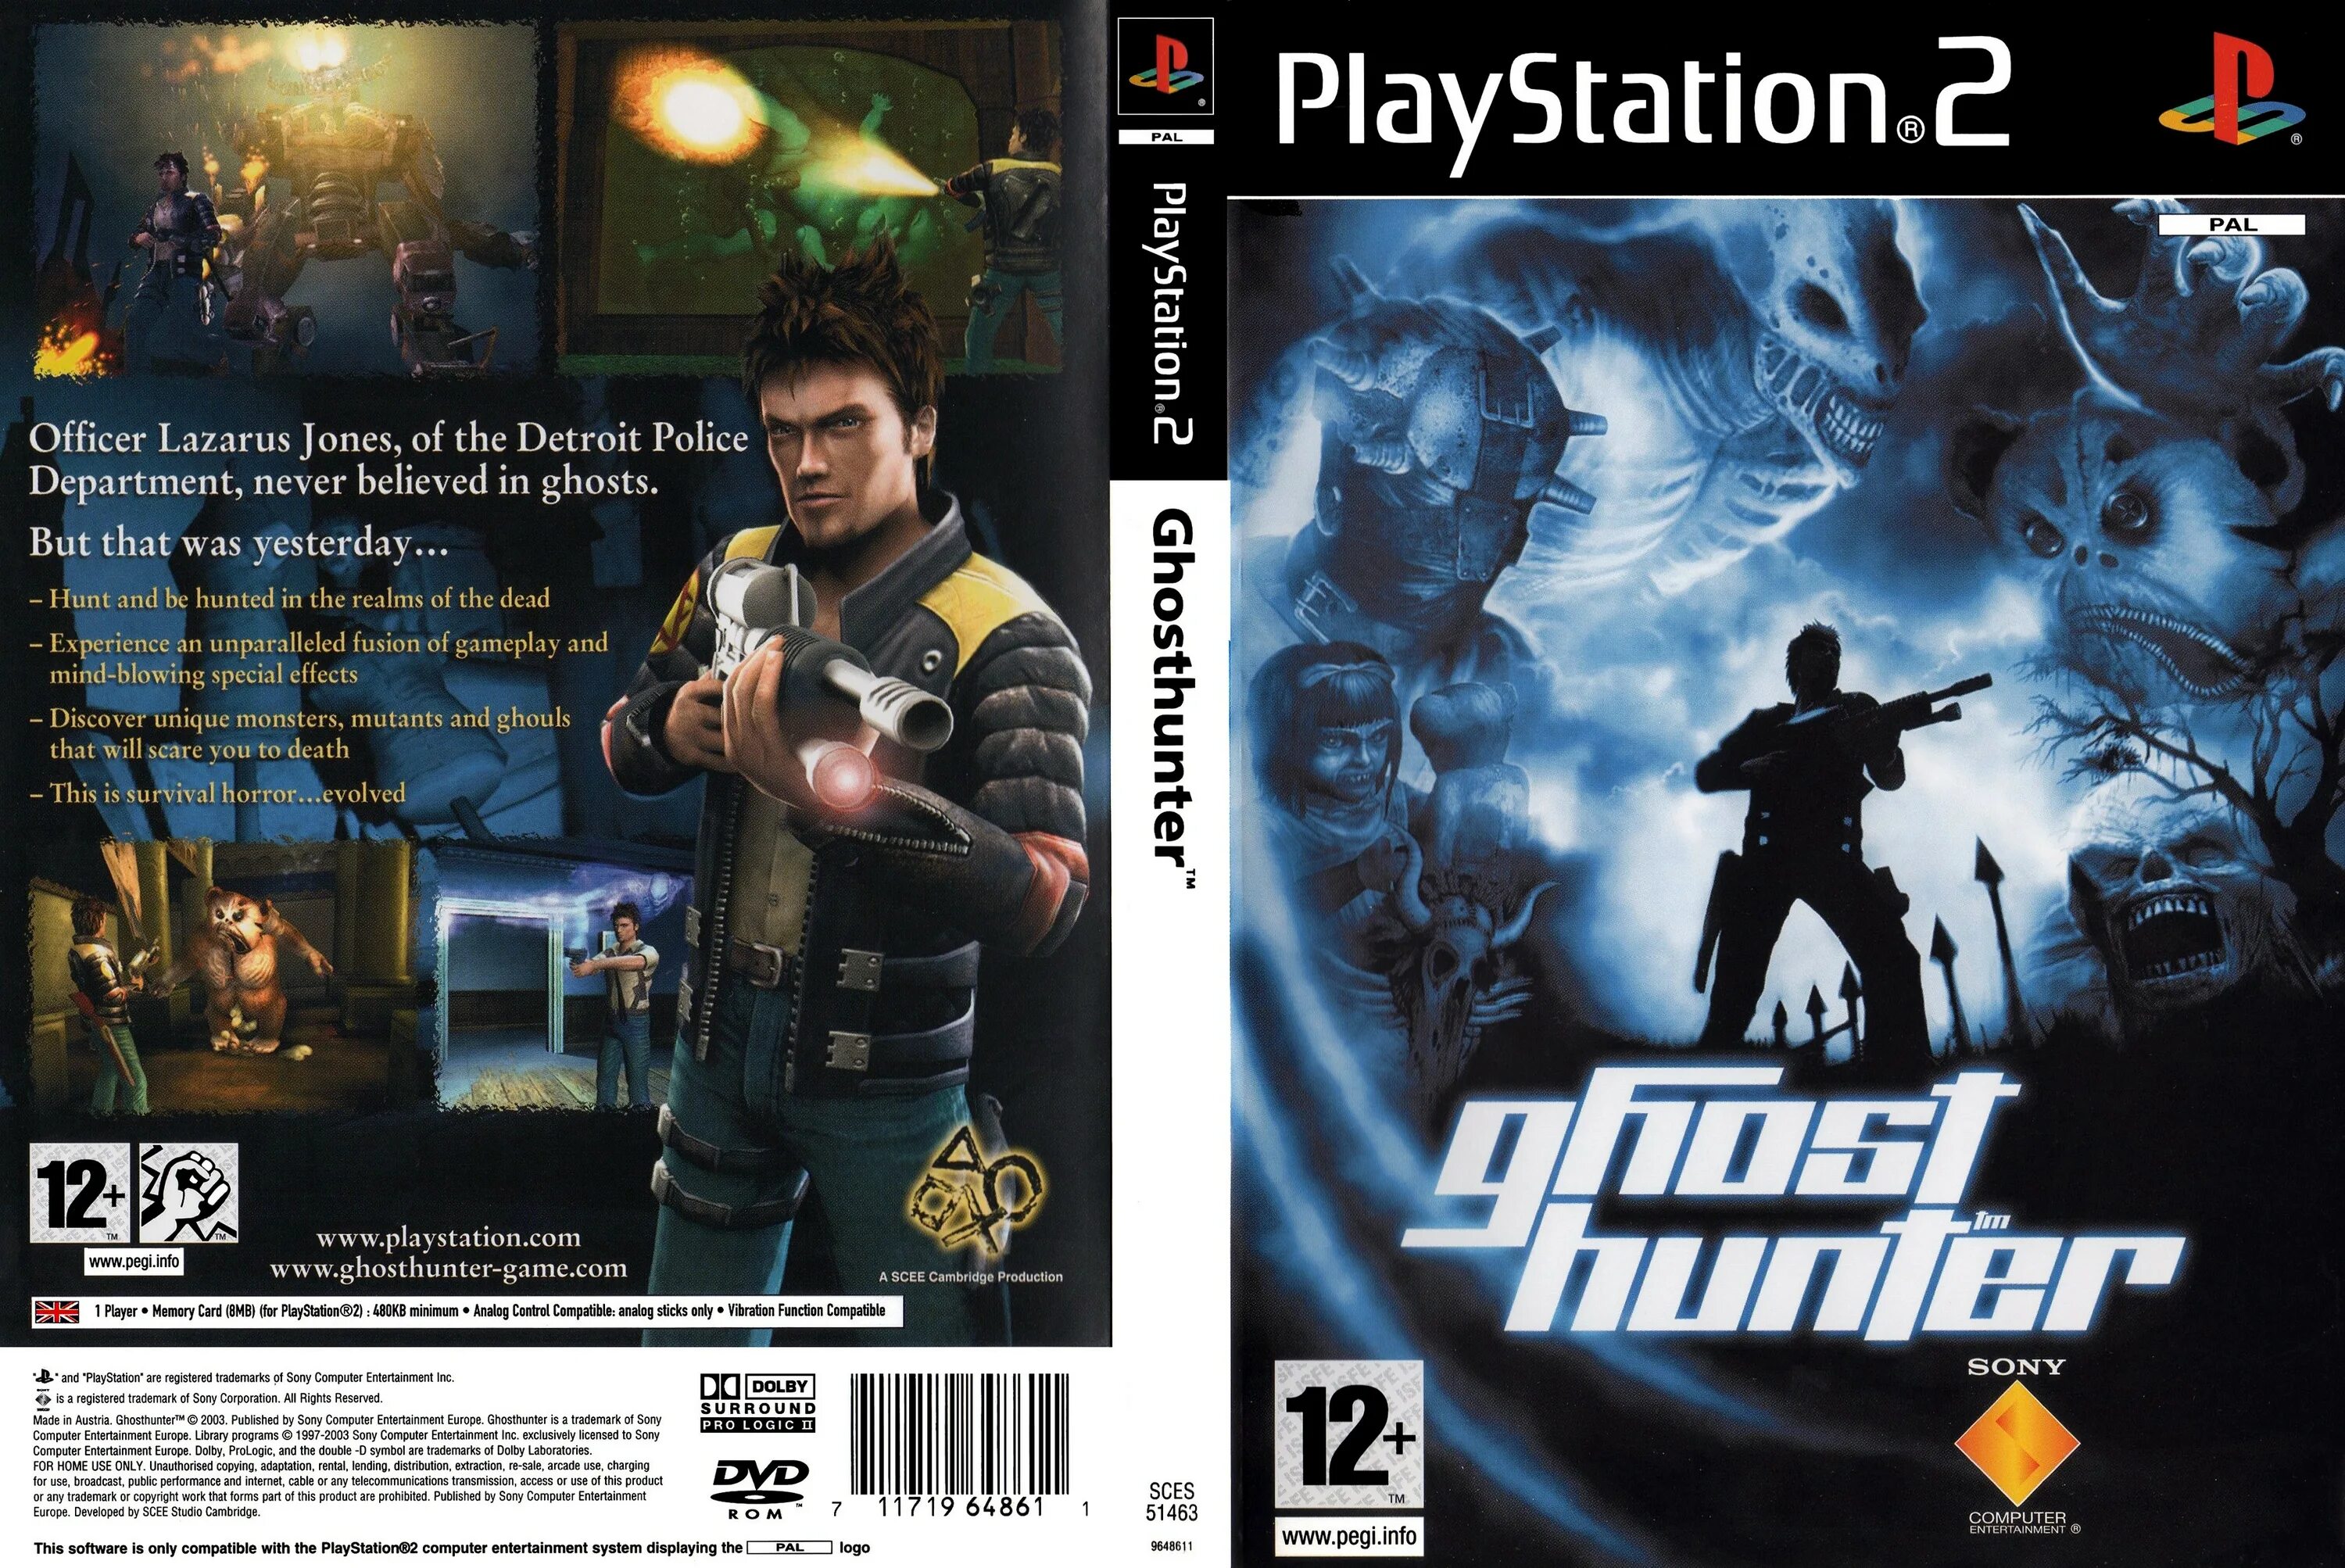 Playstation 2 игры 1. Ghost Hunter ps2 обложка. Ghost Hunter ps2 диск. Ghost Hunter ps2 вкладыш. Ghost Hunter ps2 Cover.